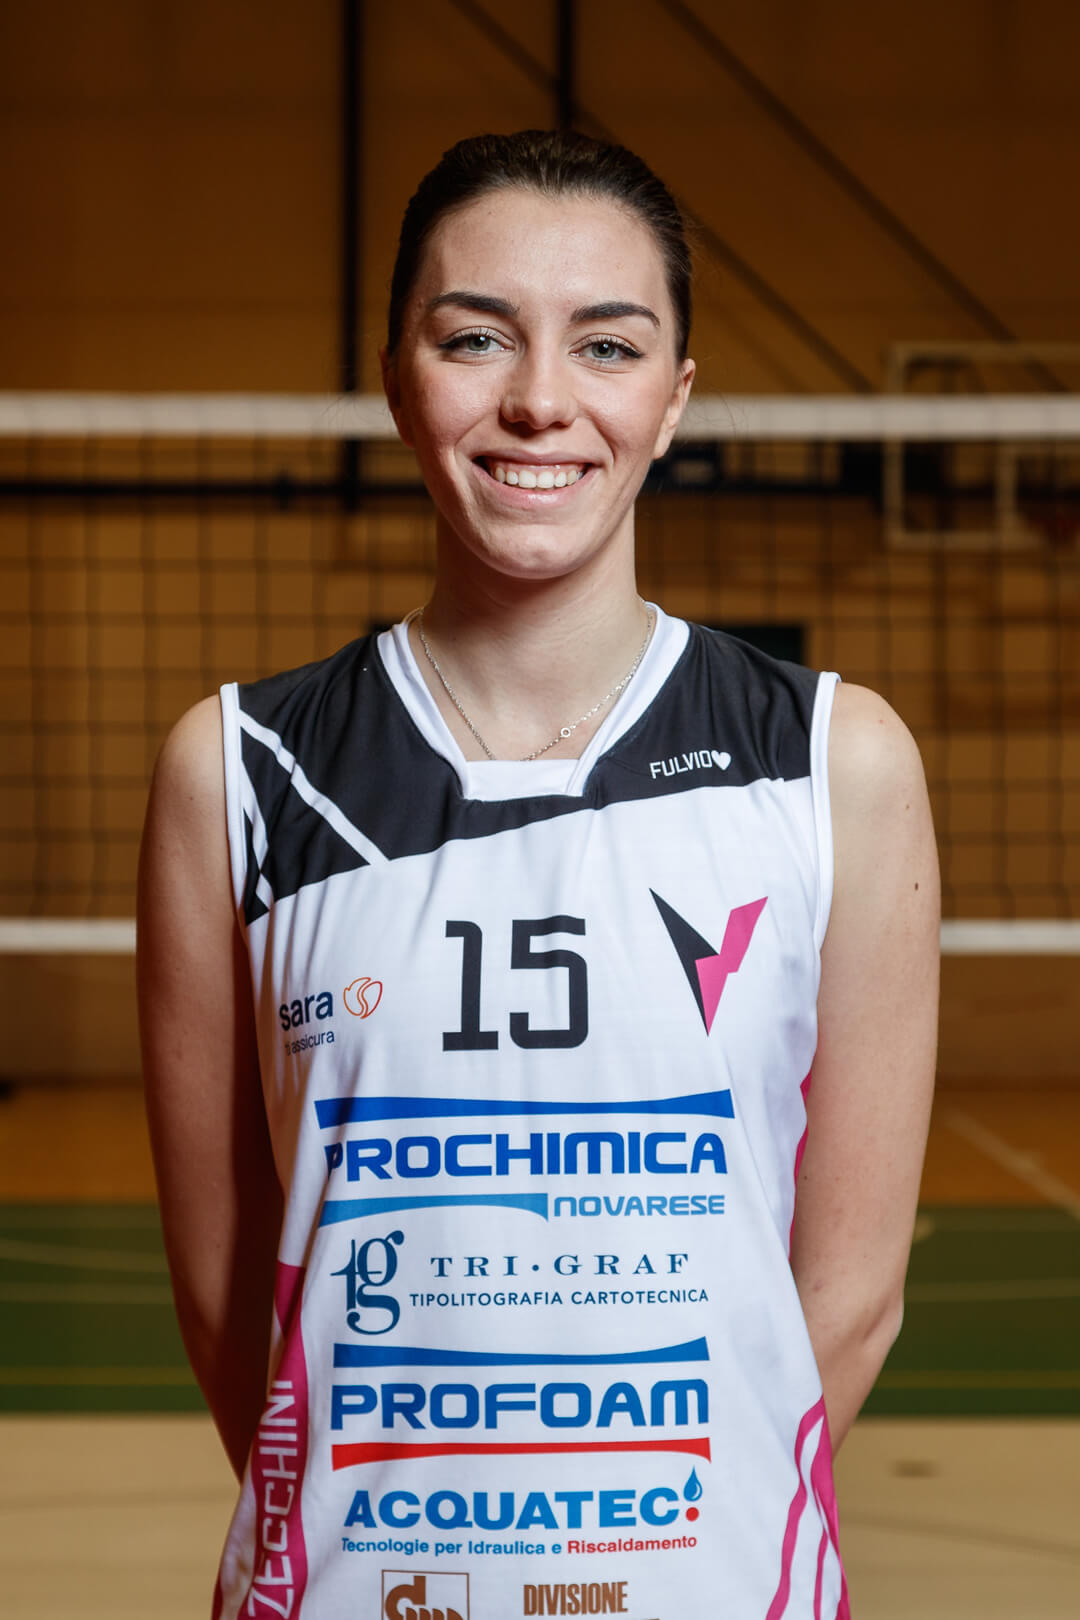 15 – Irene Zecchini